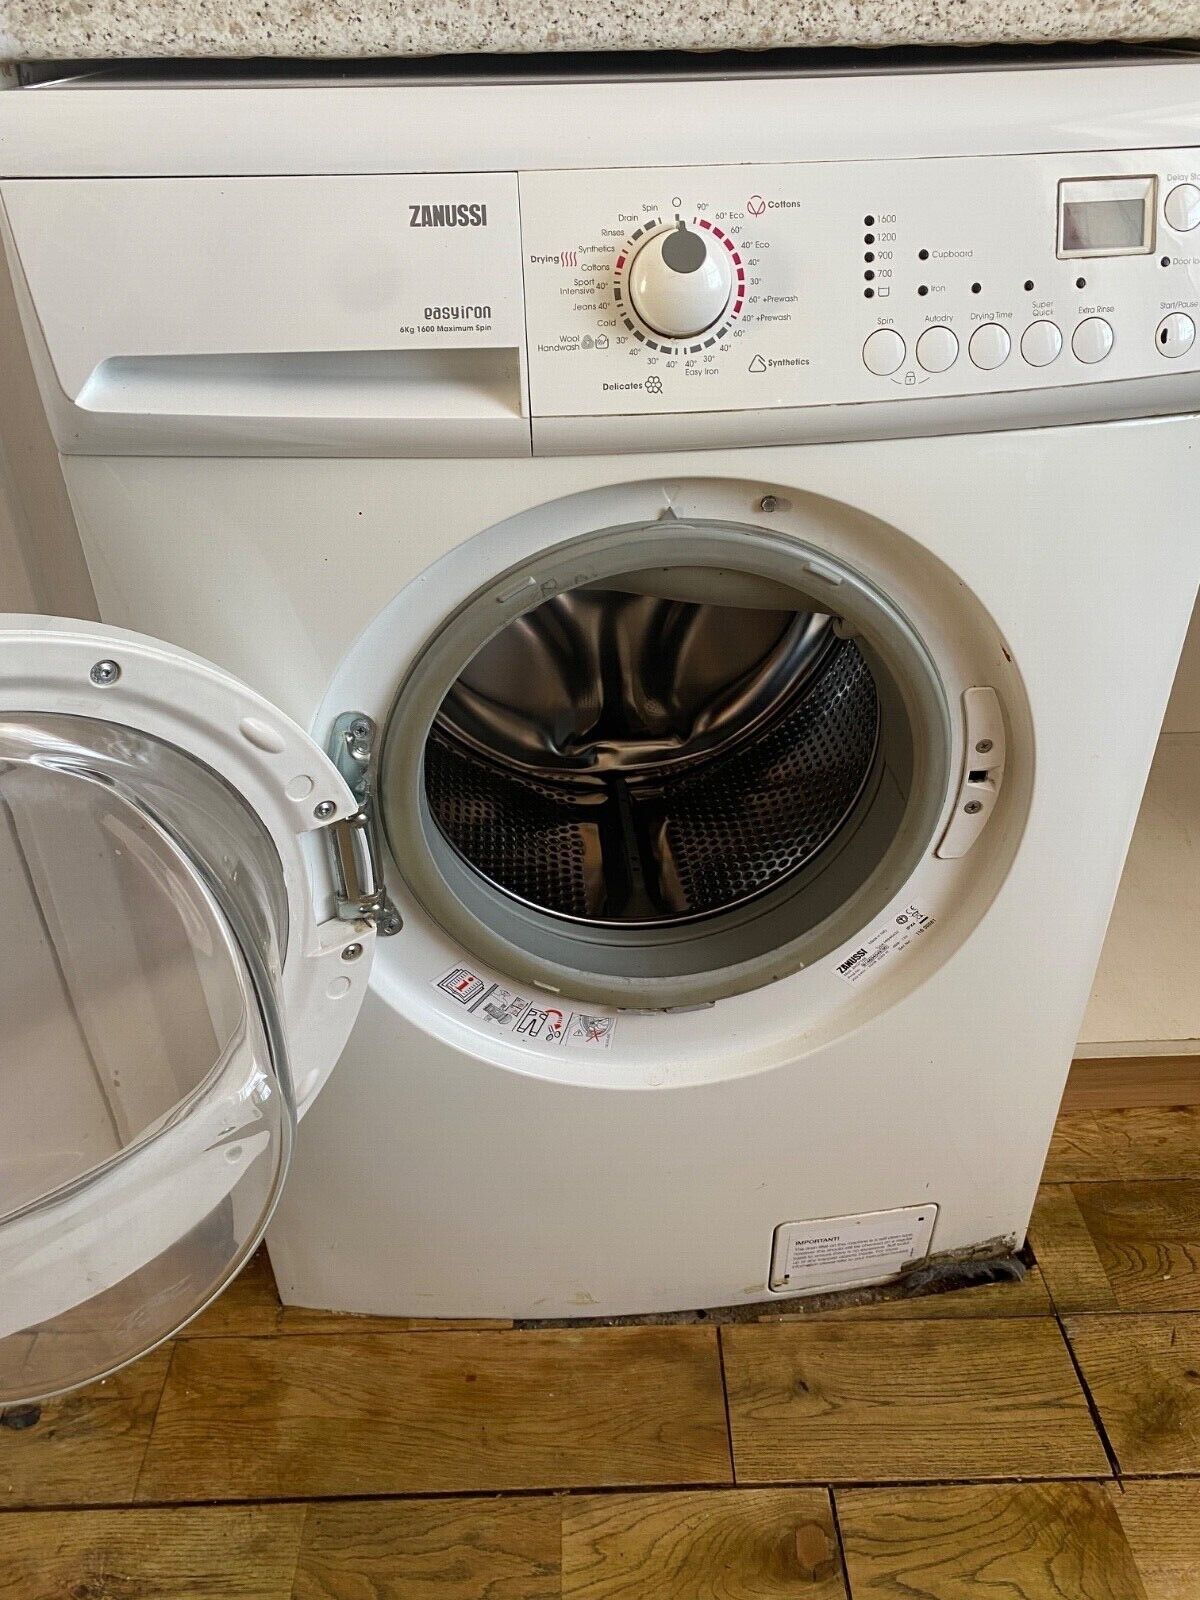 ZANUSSI washing machine, mint condition 